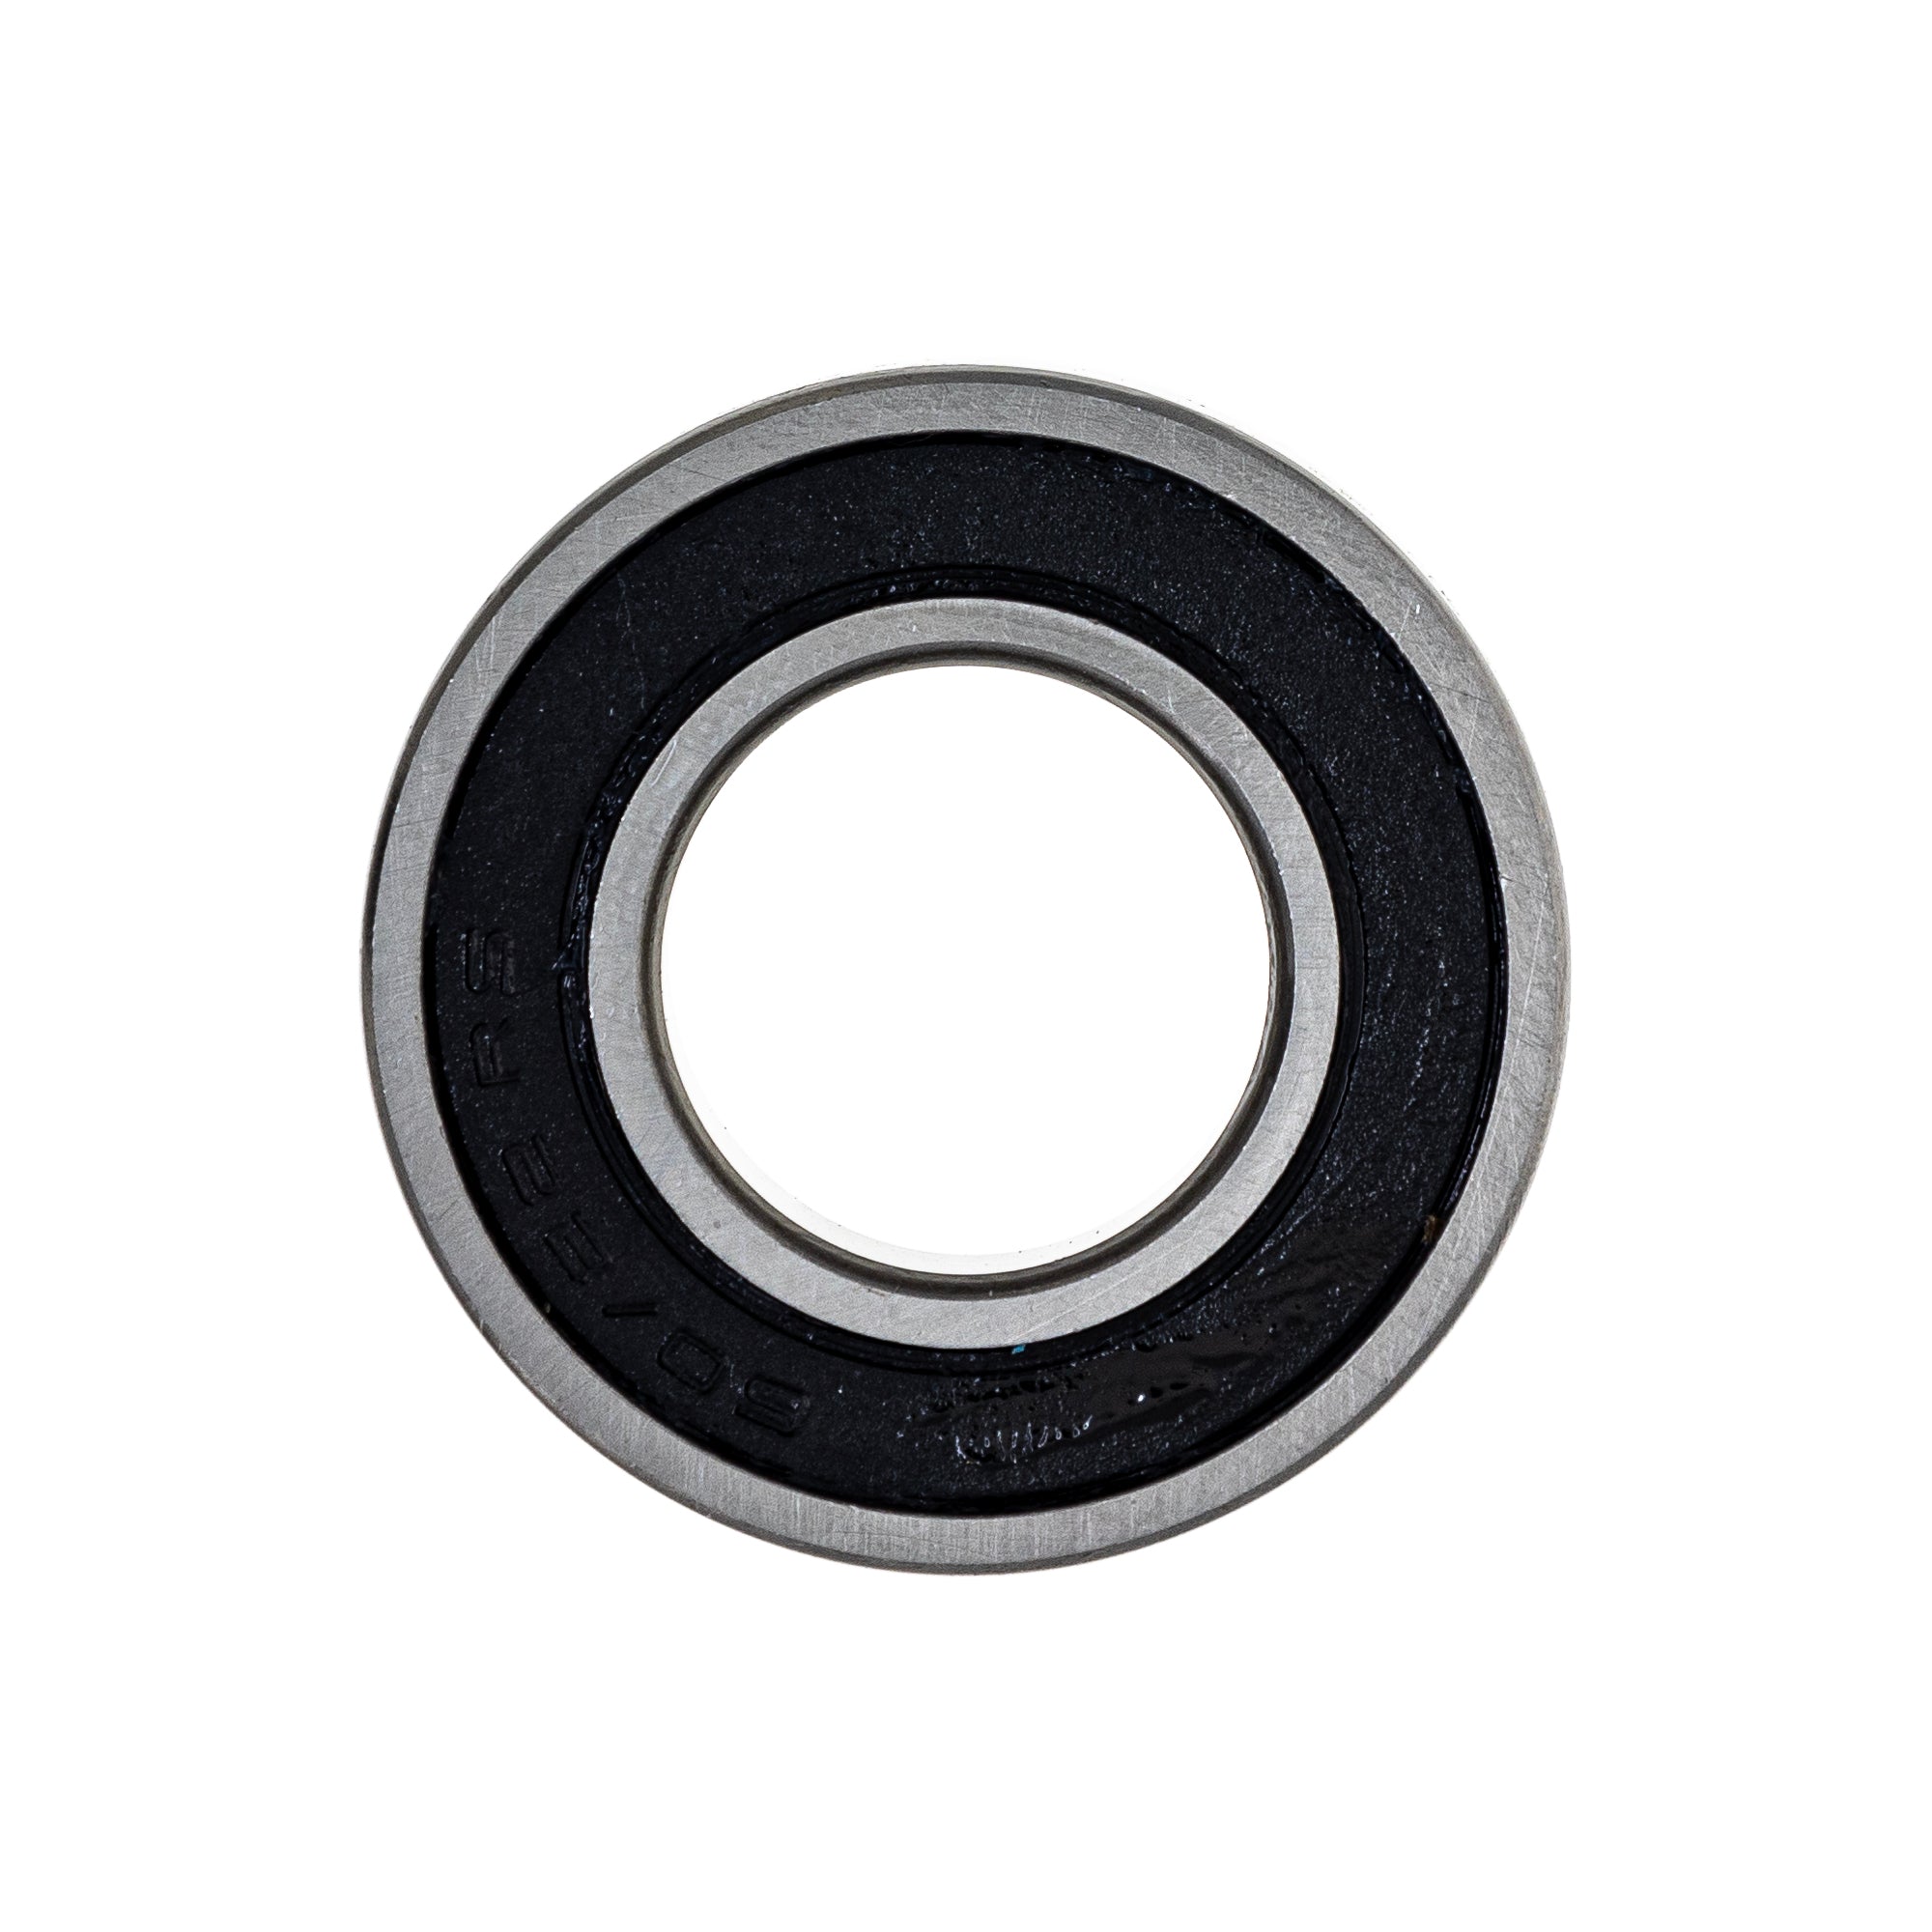 Wheel Bearing for Yamaha Phazer Venture XL 93306-00420 22x44x12mm 2